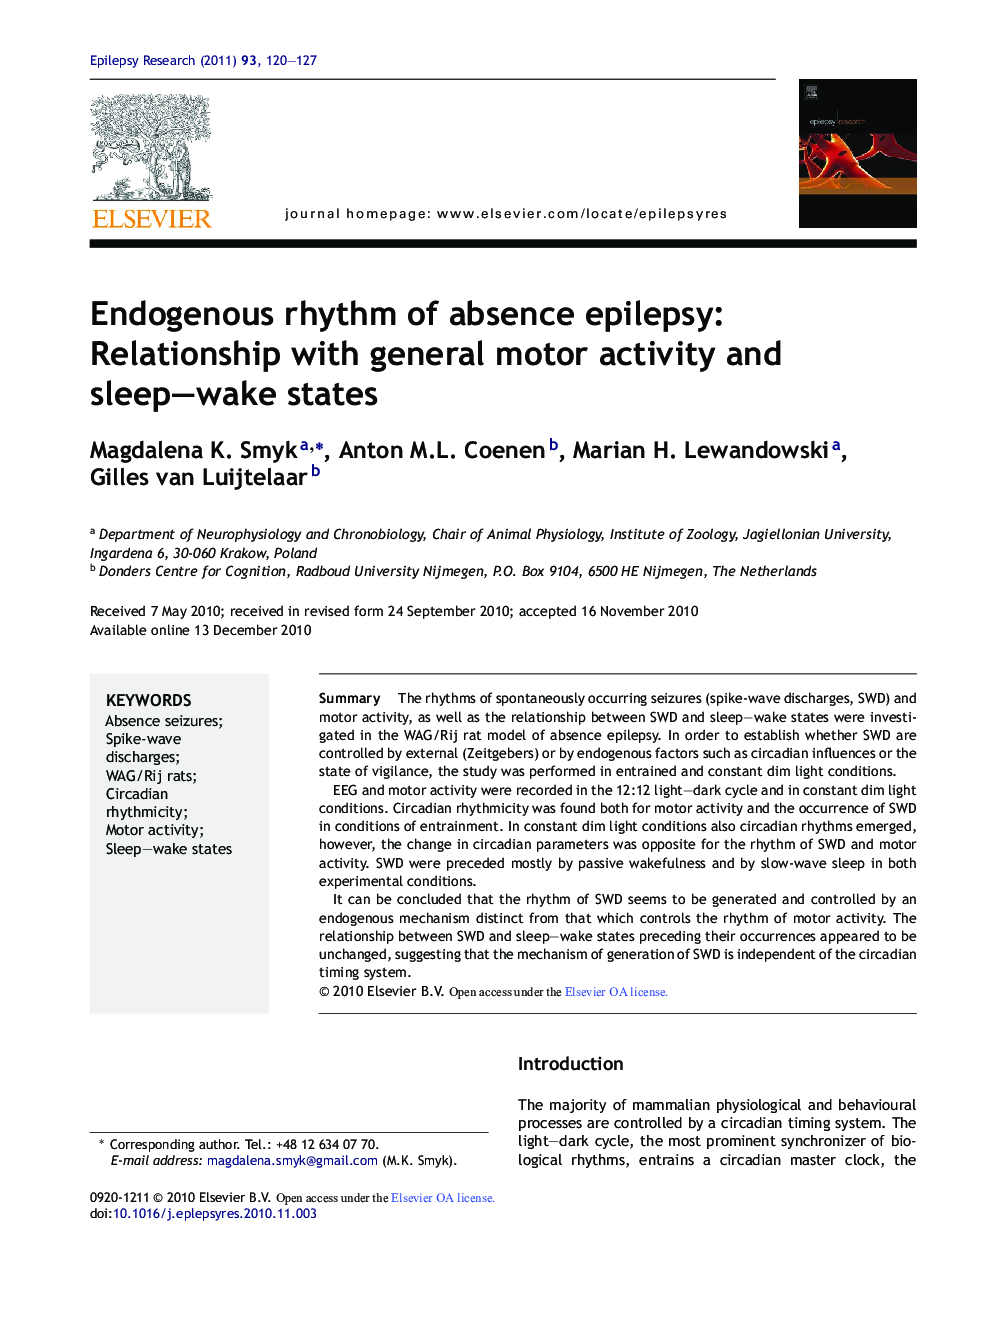 Endogenous rhythm of absence epilepsy: Relationship with general motor activity and sleep-wake states